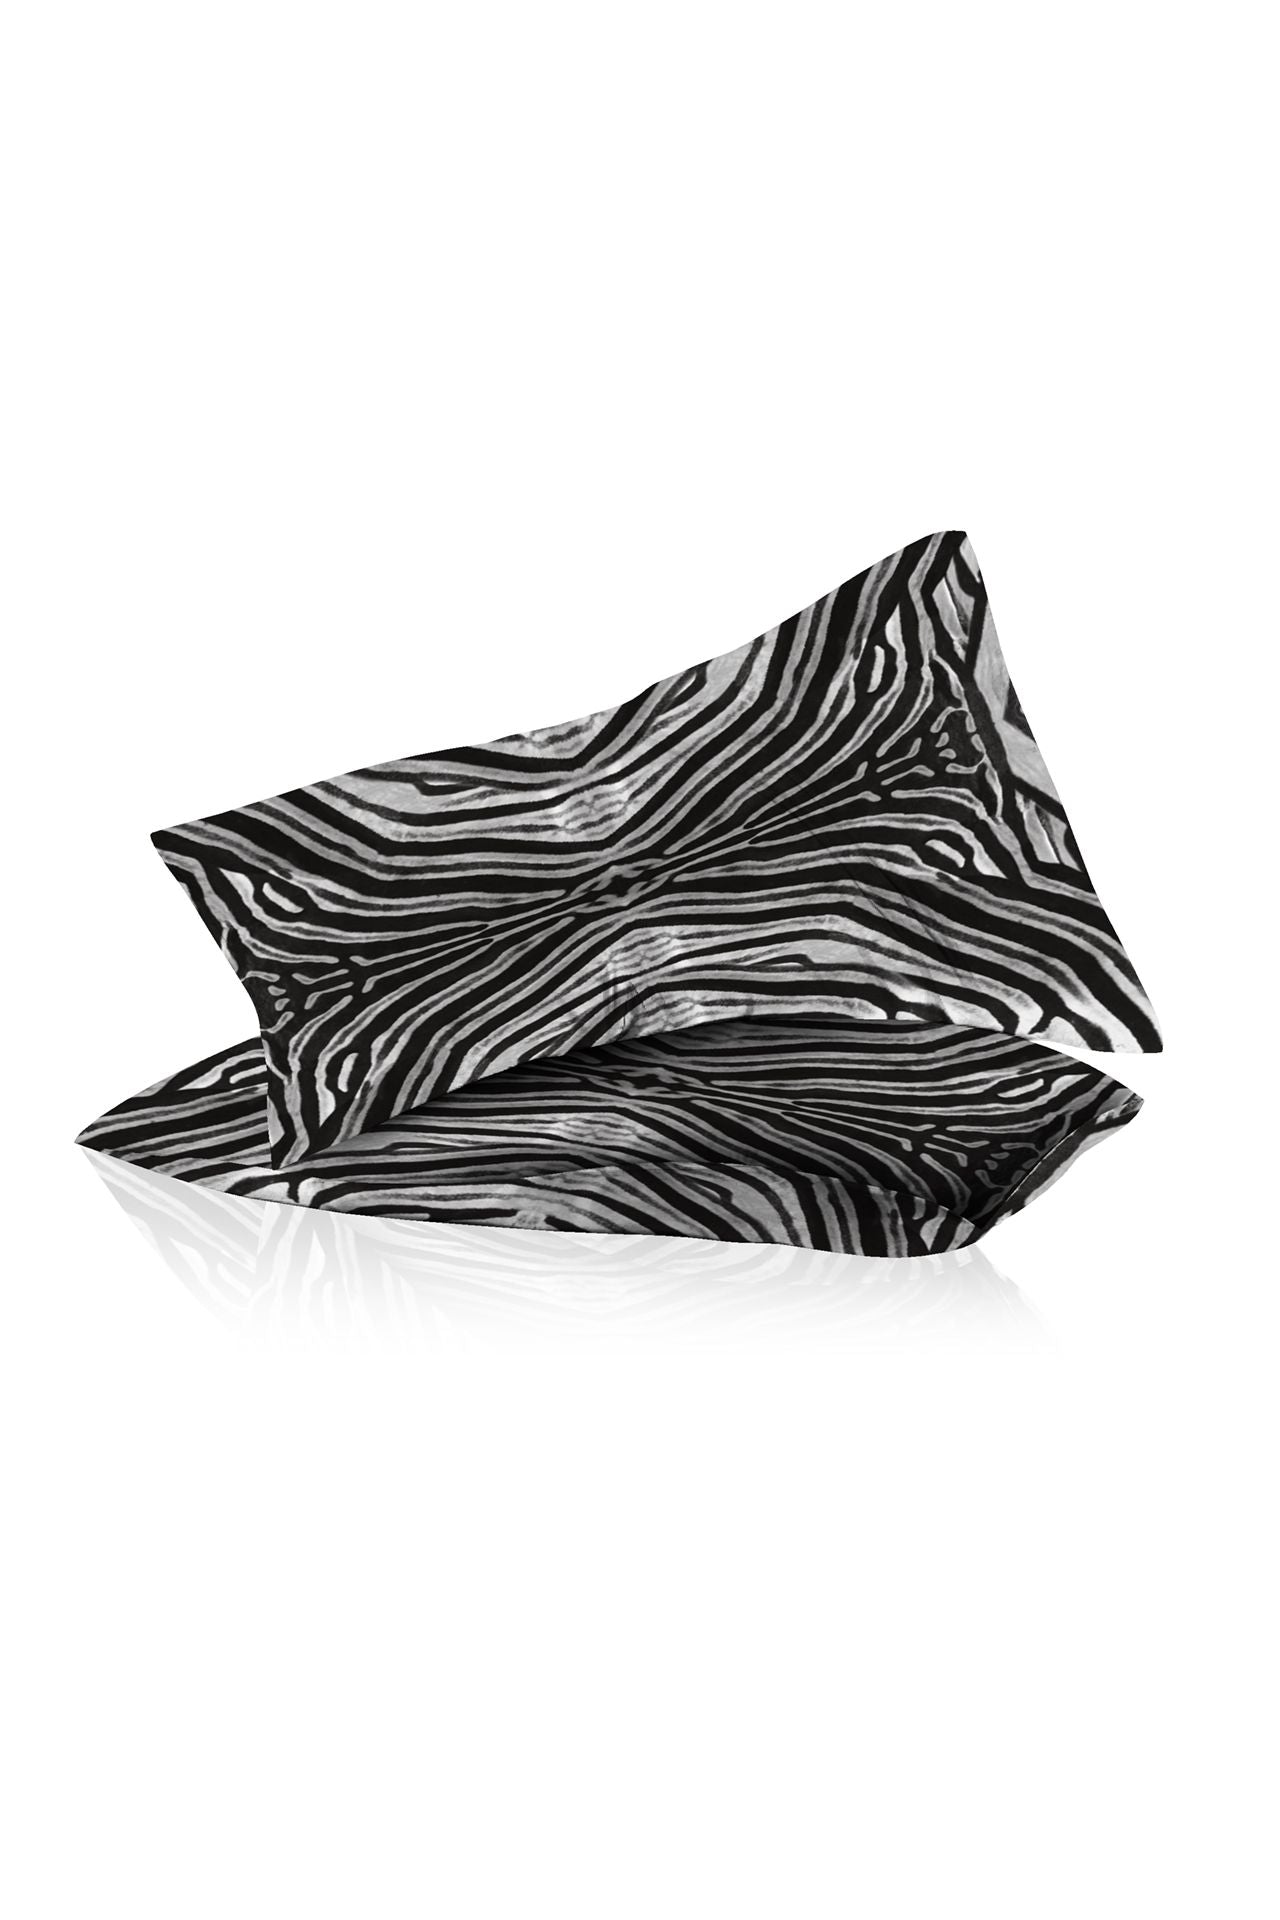 "zebra print decorative pillows" "Kyle X Shahida" "designer decorative pillows" "pillows for beds decorative"